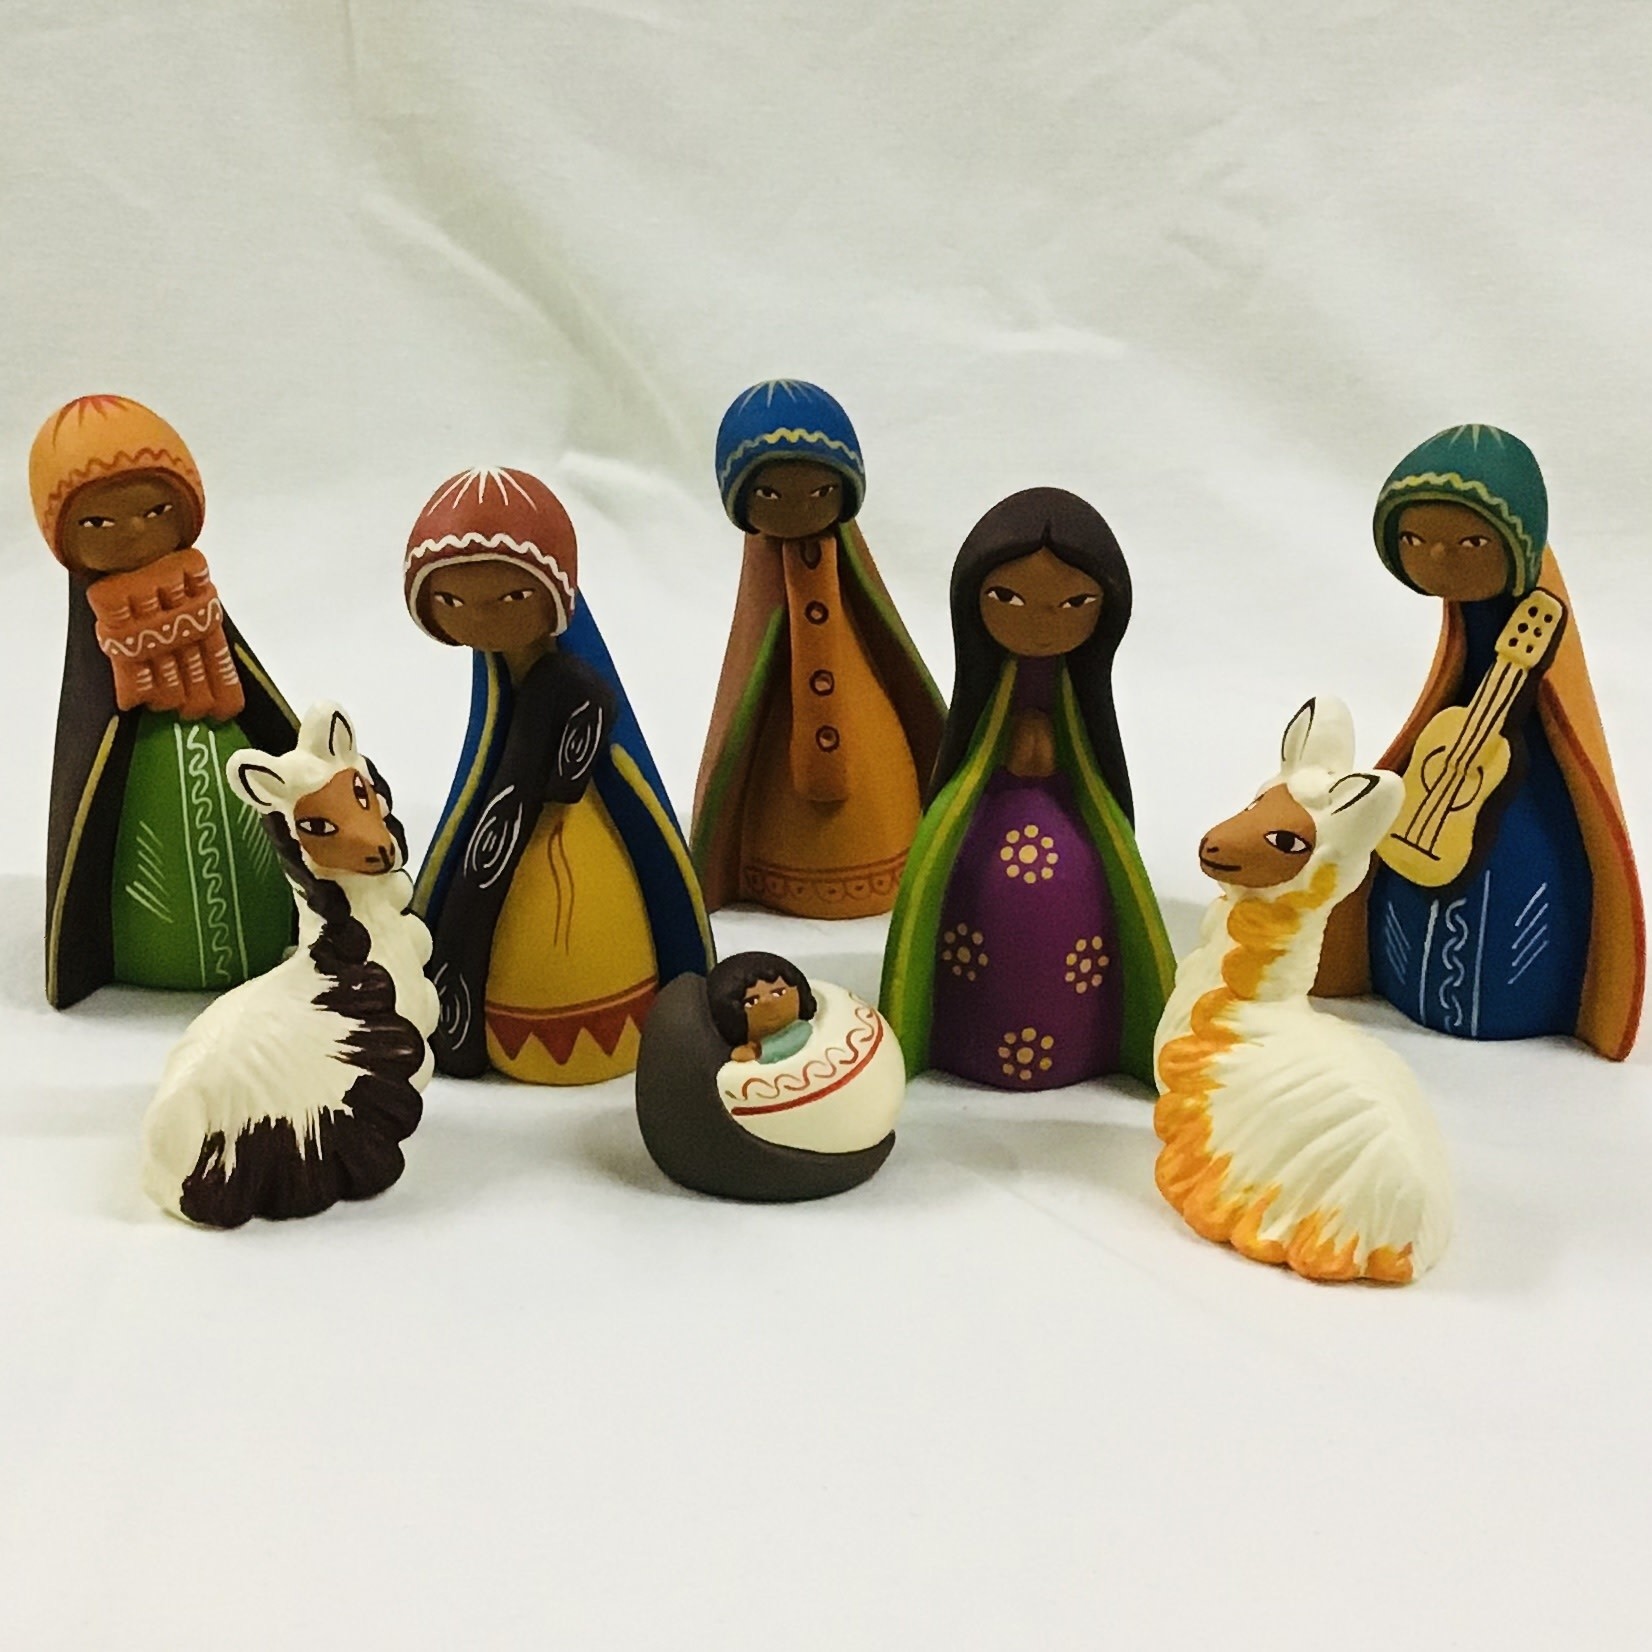 Medium Ceramic Nativity with Two Llamas